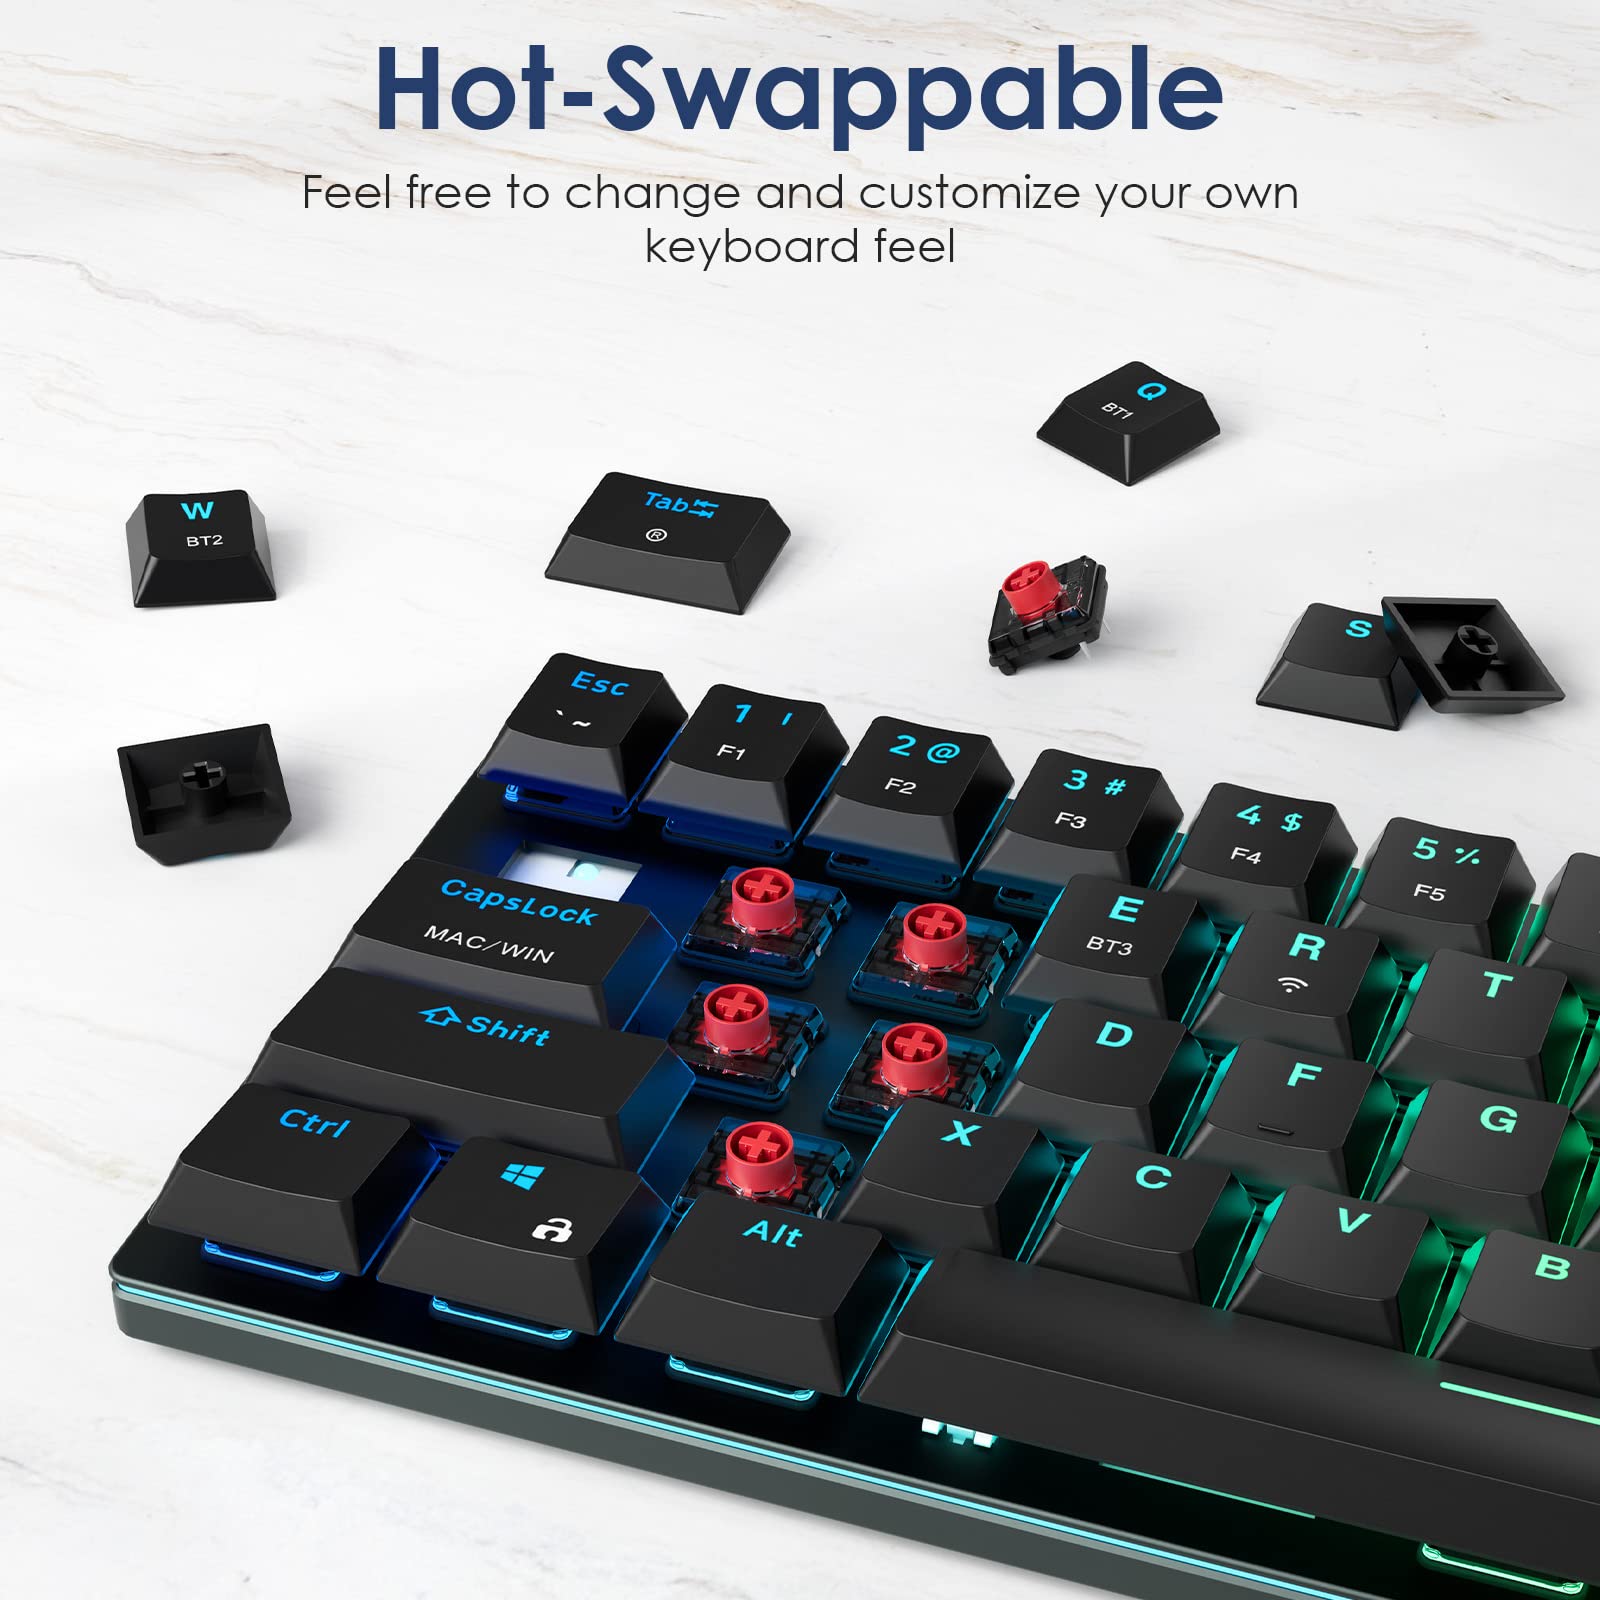 DURGOD Wireless Mechanical Keyboard Hot-swappable $35